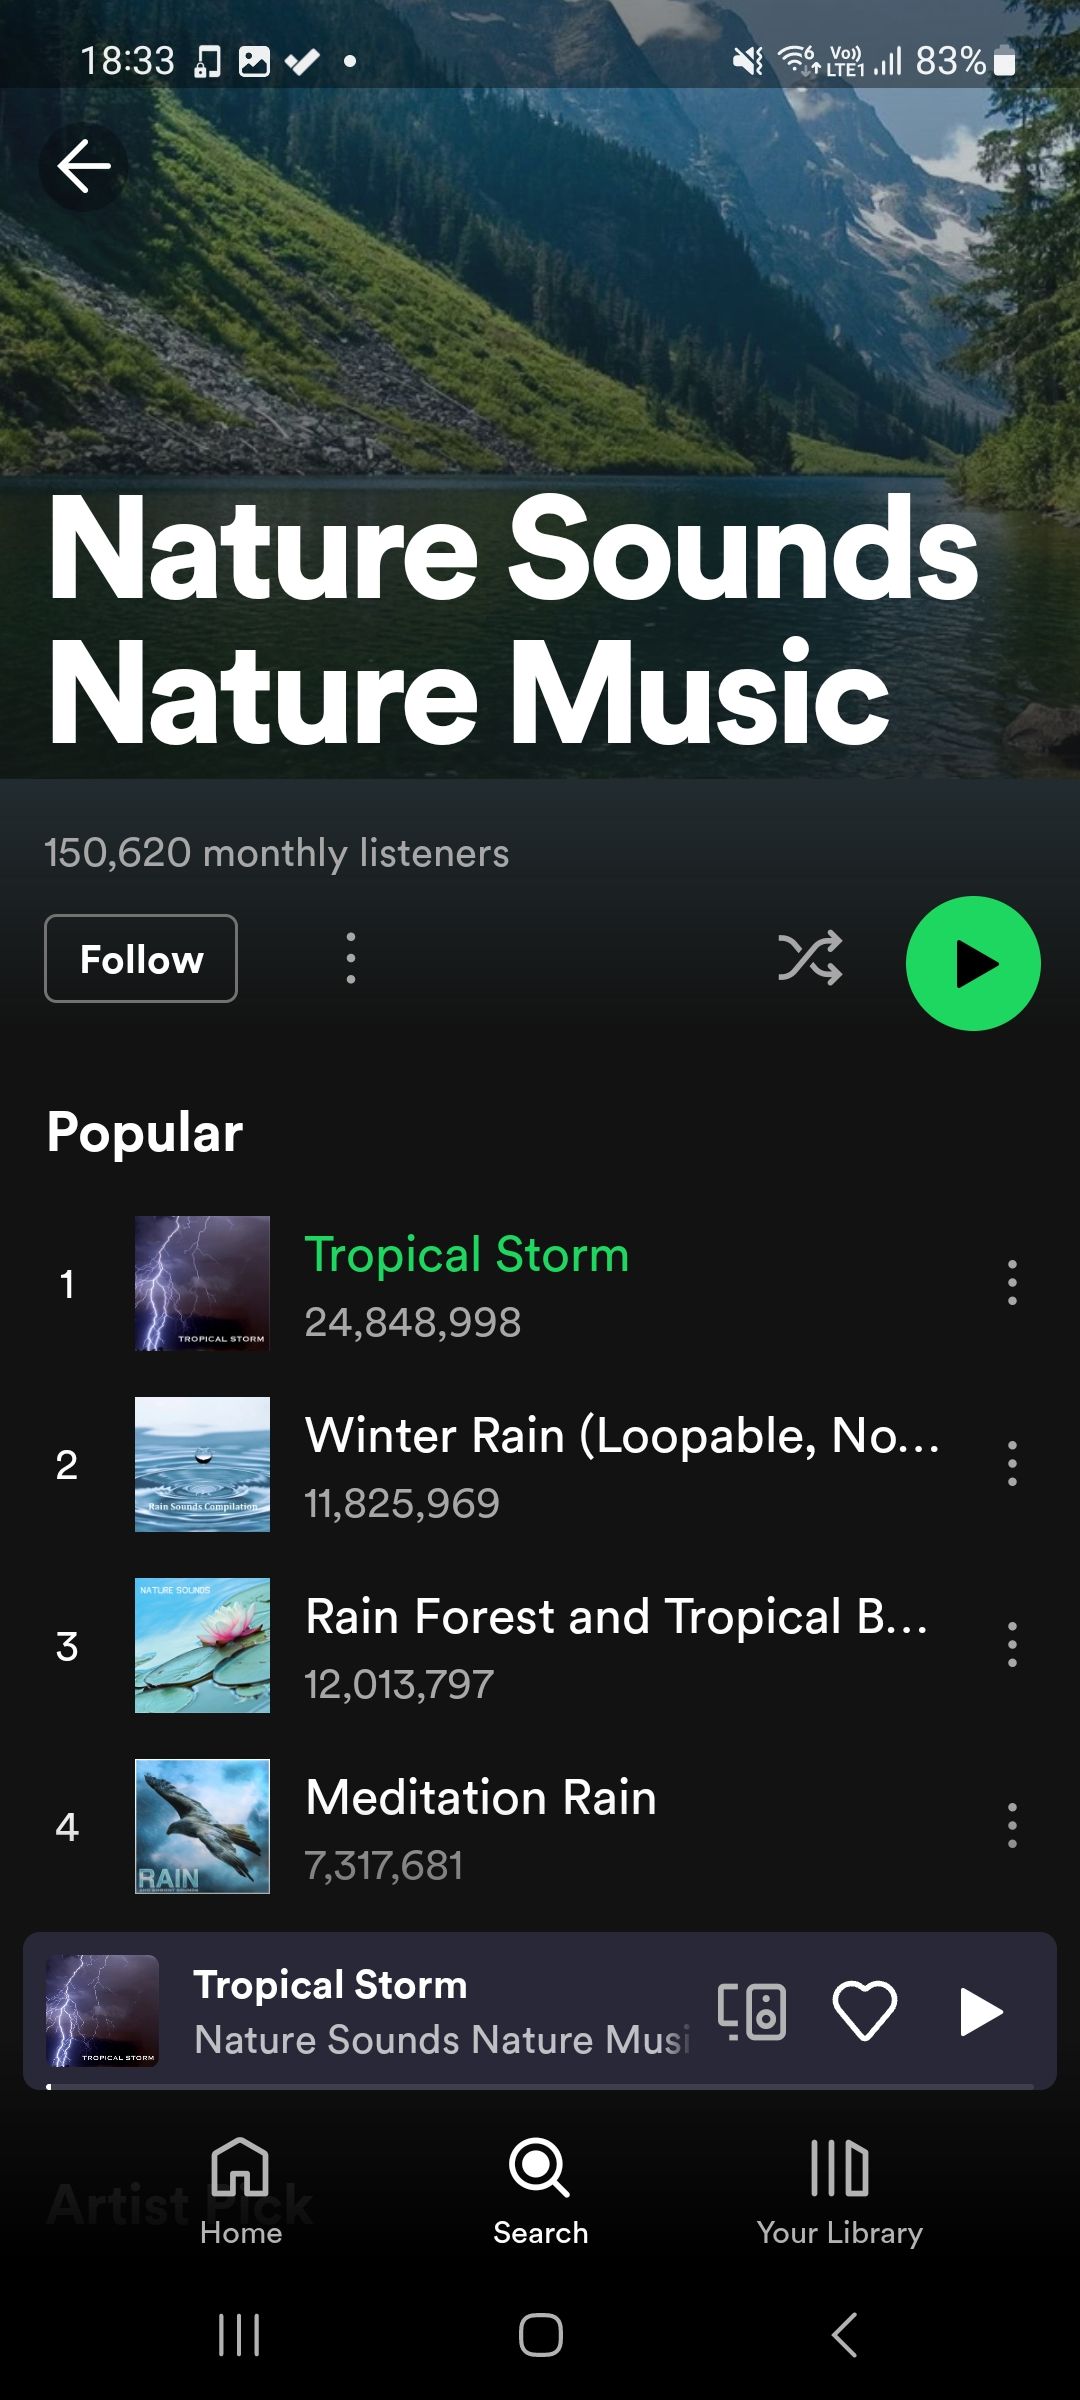 Nature Sounds Nature Music artist Spotfiy